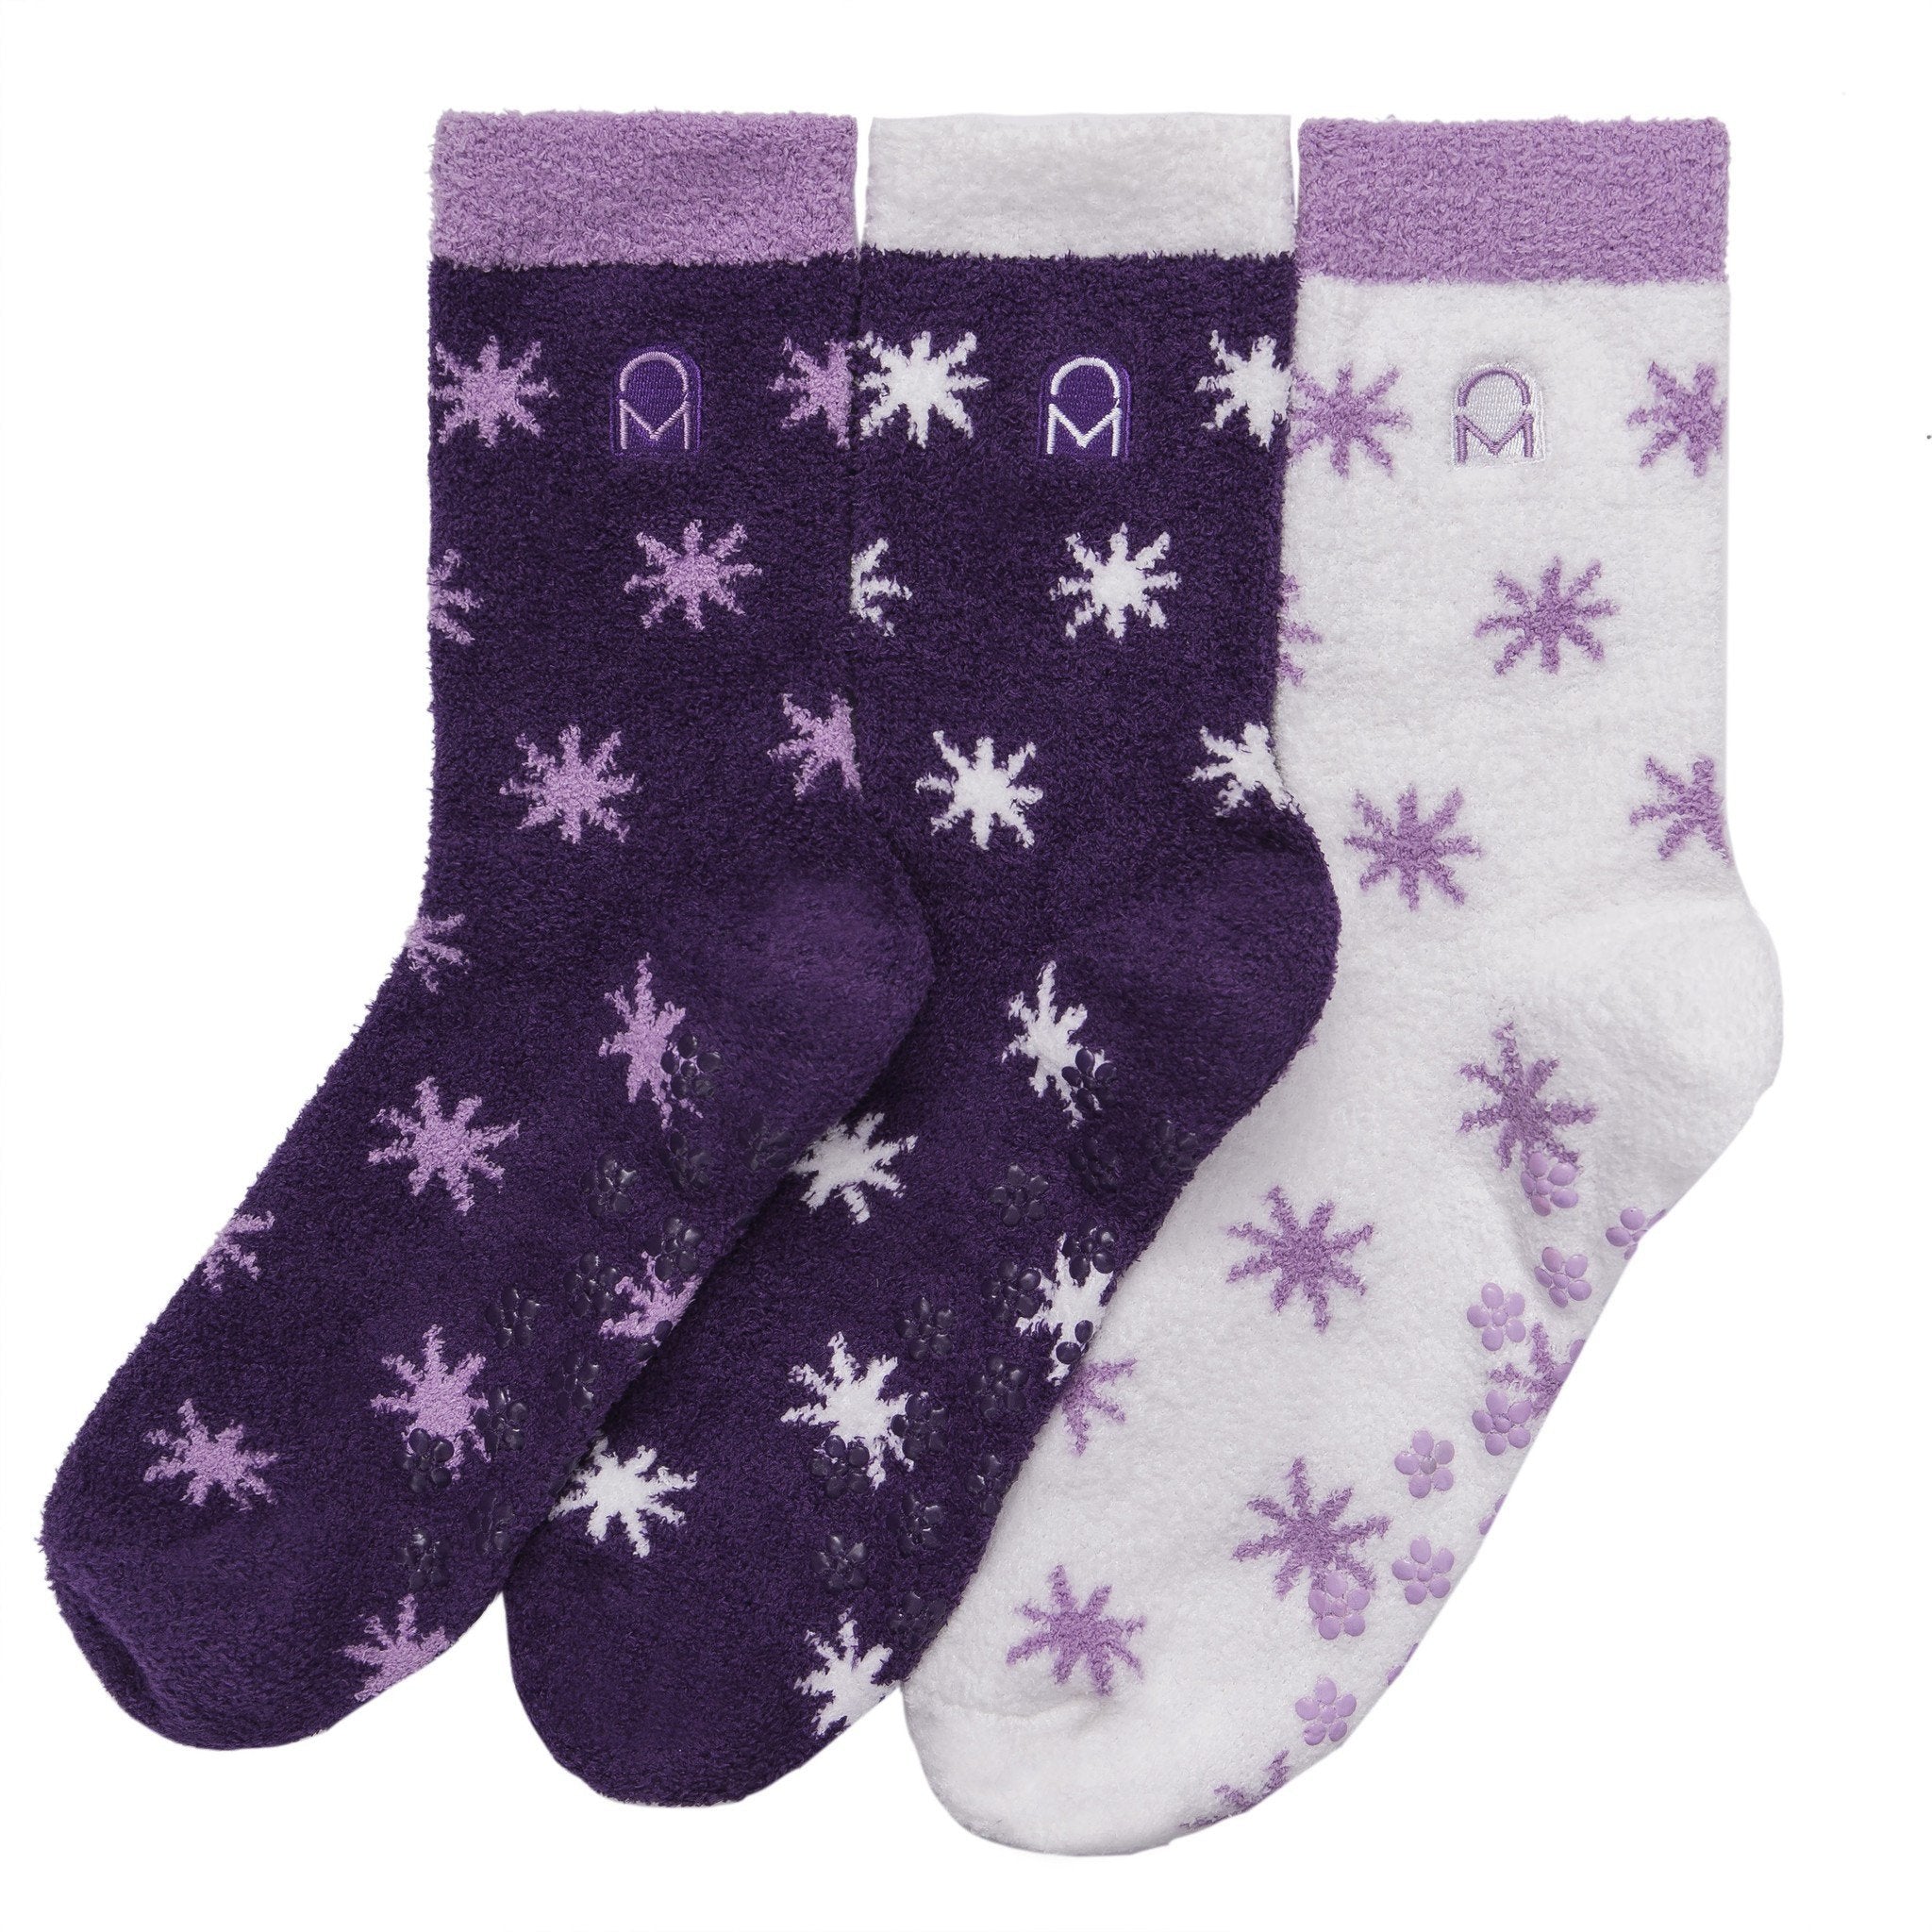 Women's Soft Anti-Skid Micro-Plush Winter Crew Socks - Set C6